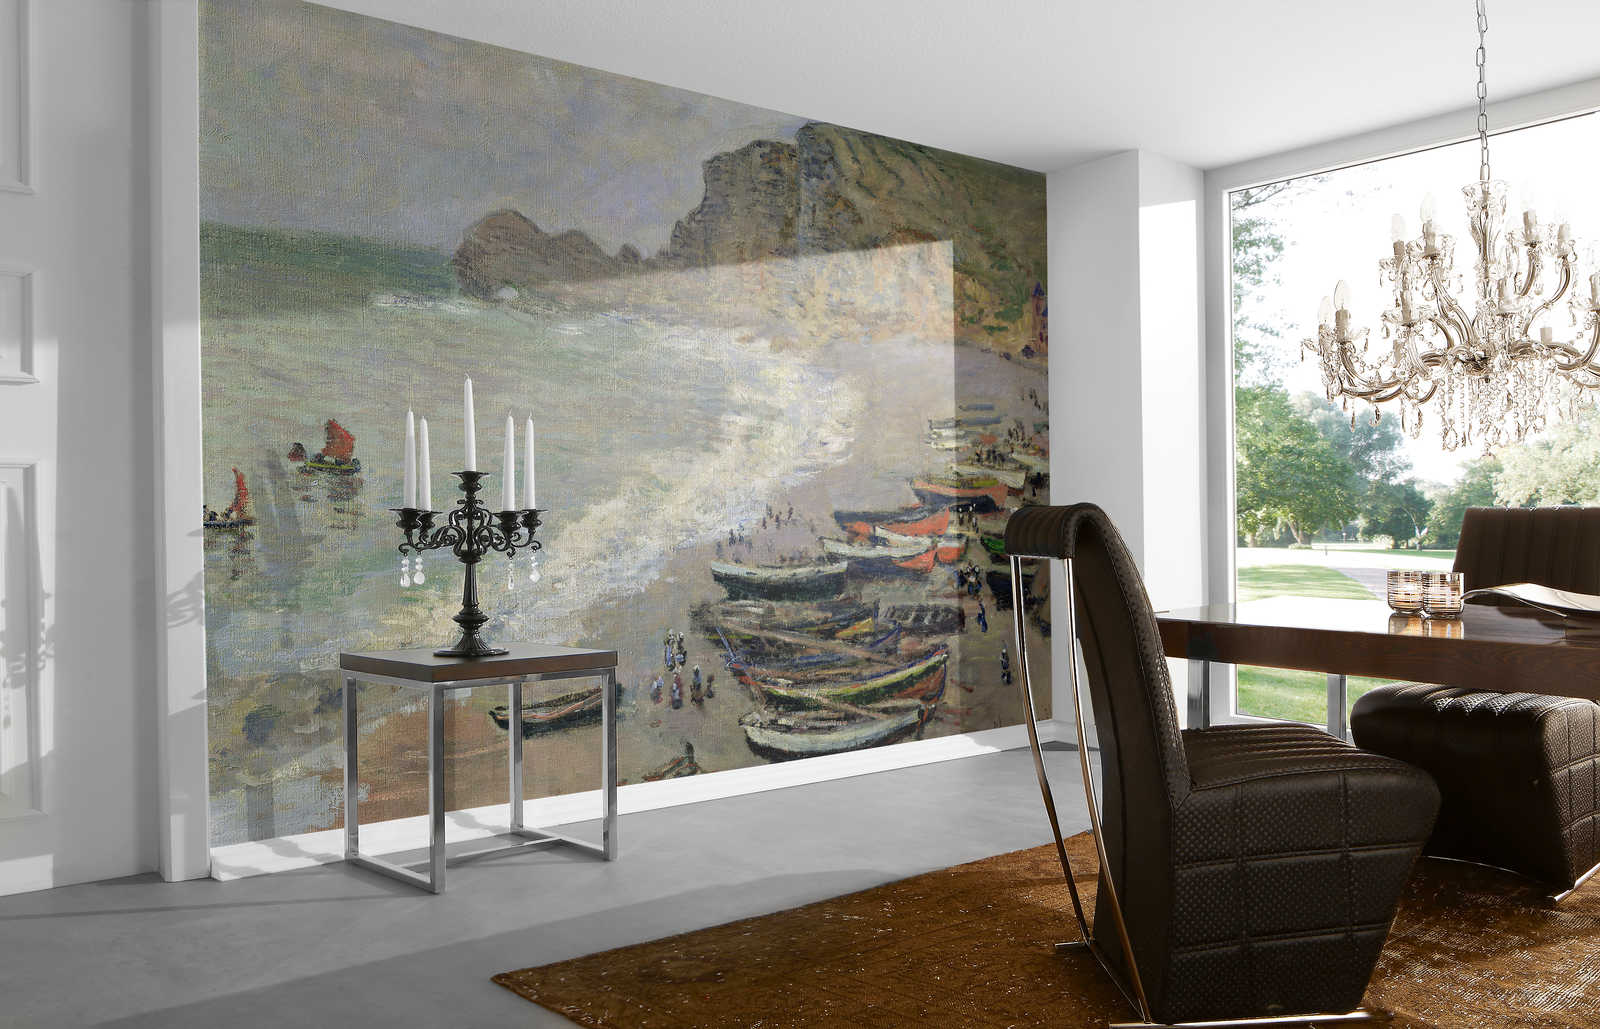             Mural "Etretat, la playa y la Puerta de Amont" de Claude Monet
        